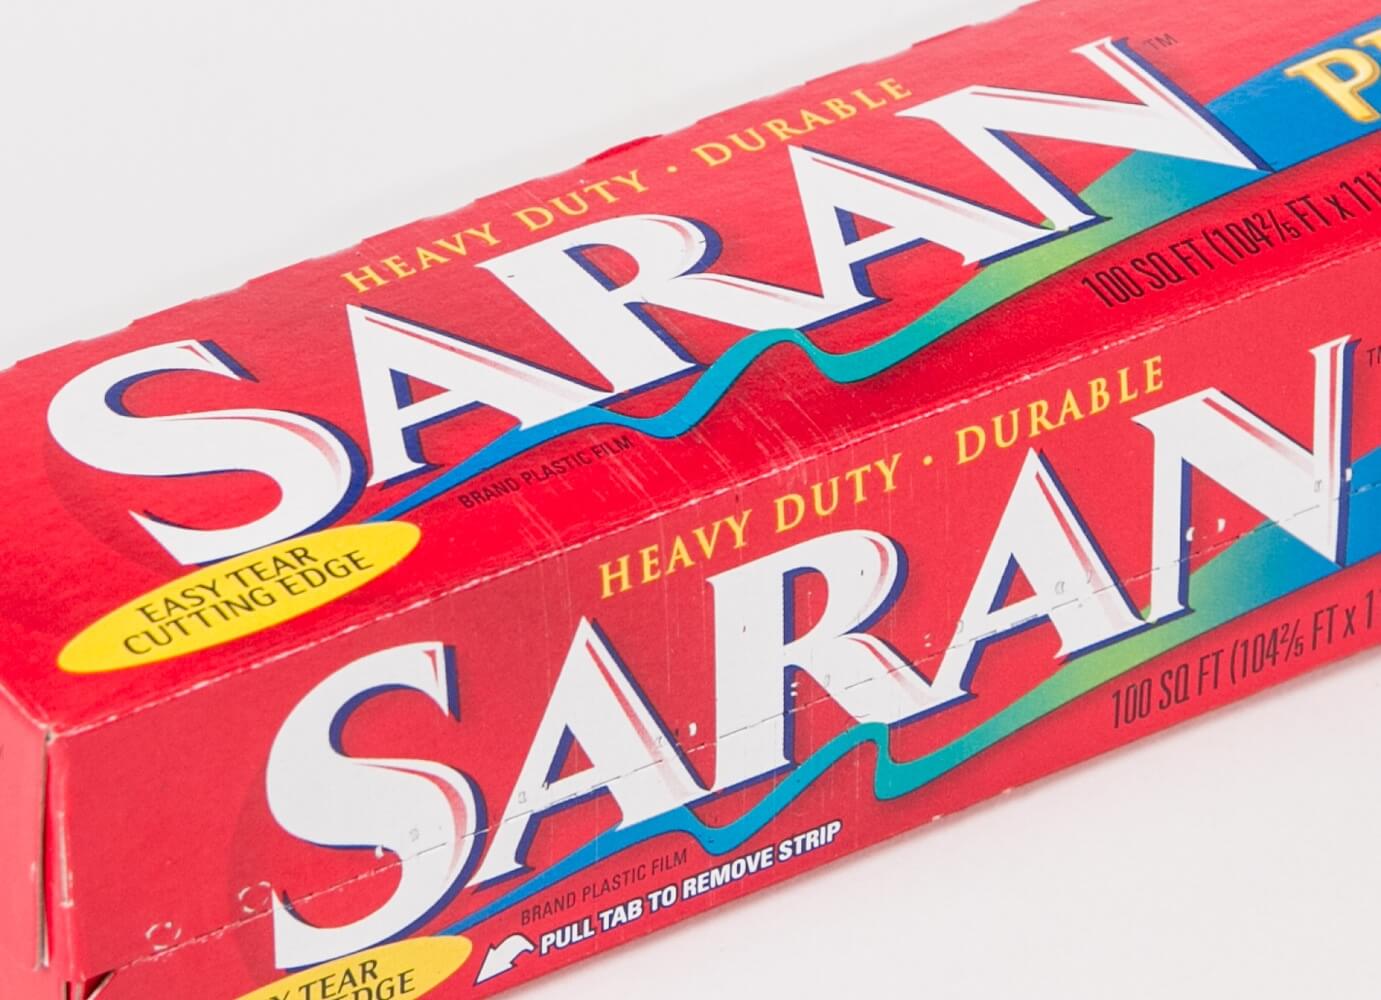 Saran Wrap Clear – 100-Ft.